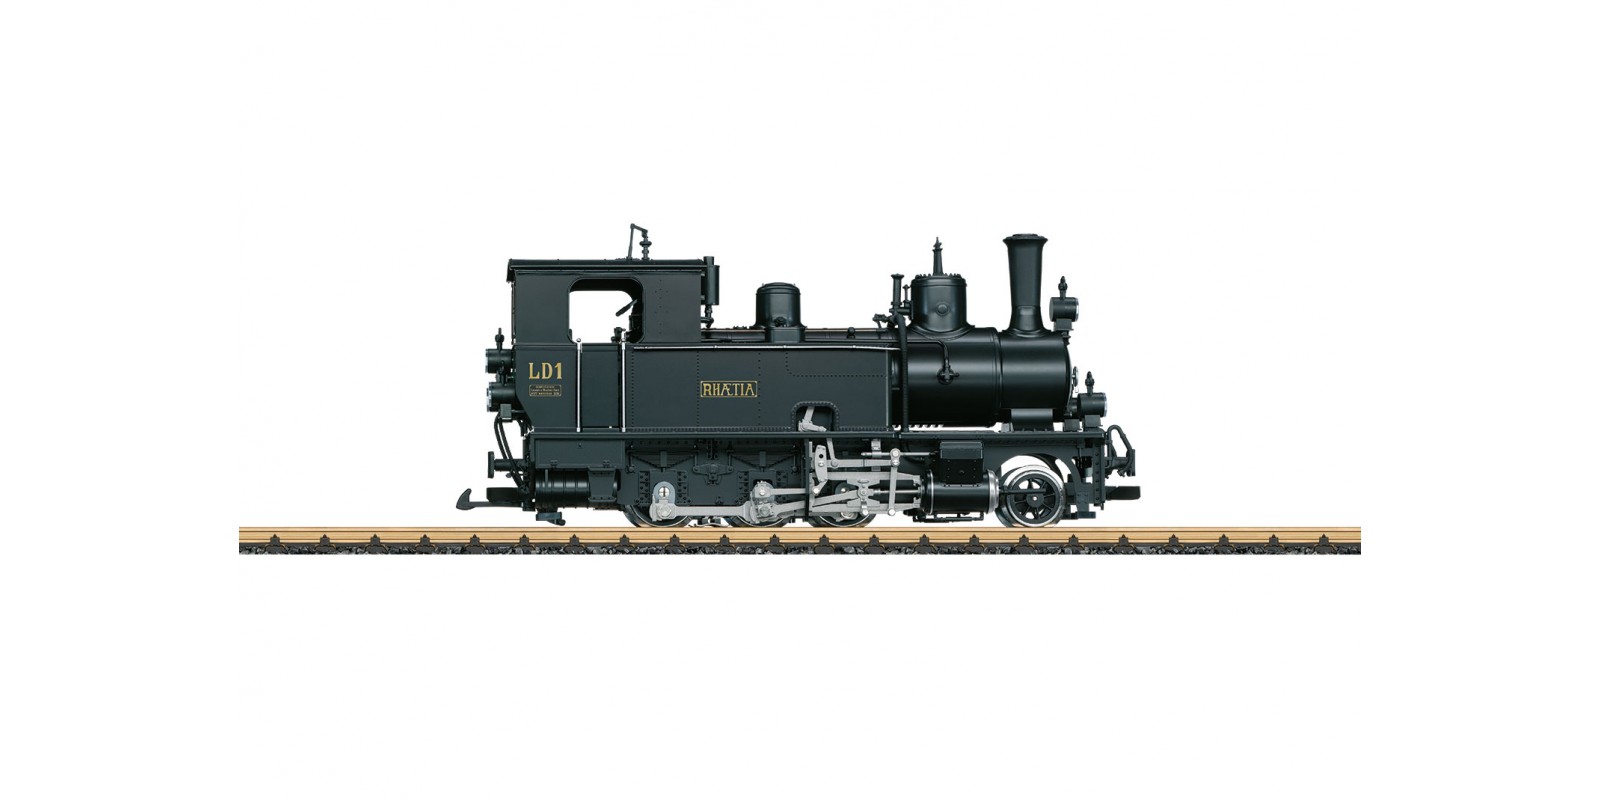 L20273 RhB Steam Locomotive, Road No. LD 1